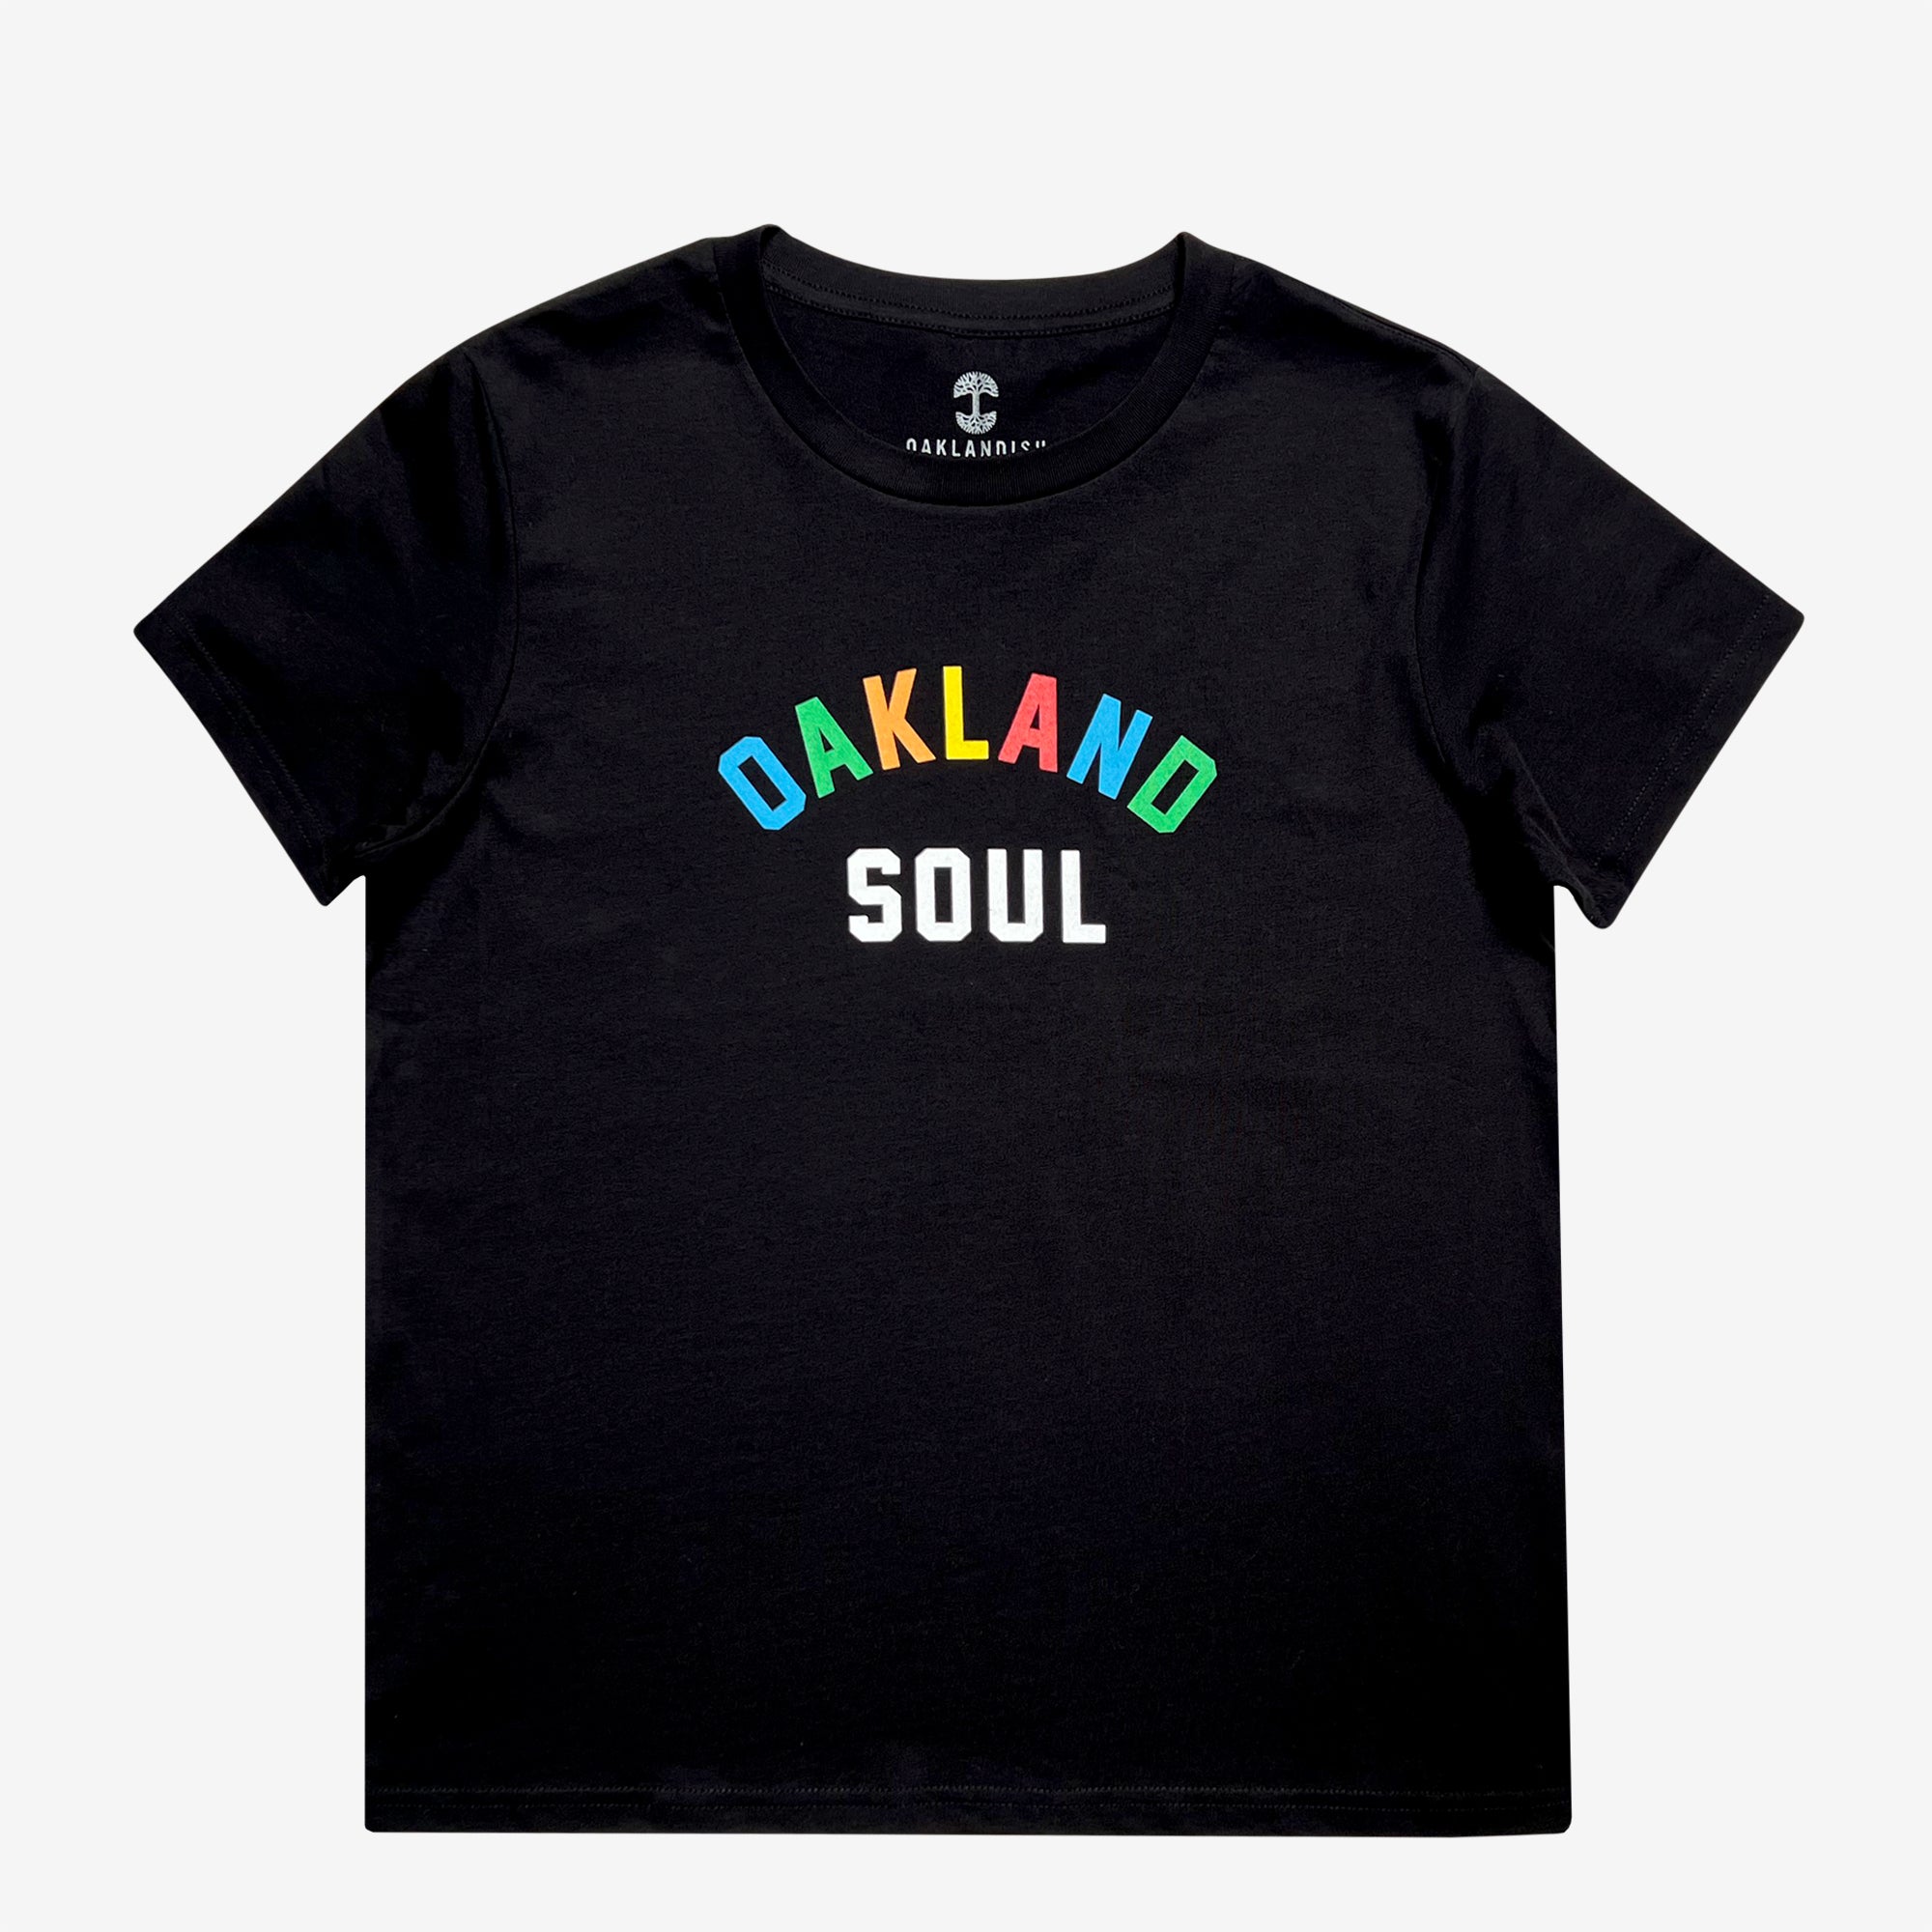 Full color Oakland Soul wordmark logo on a woman’s black t-shirt.